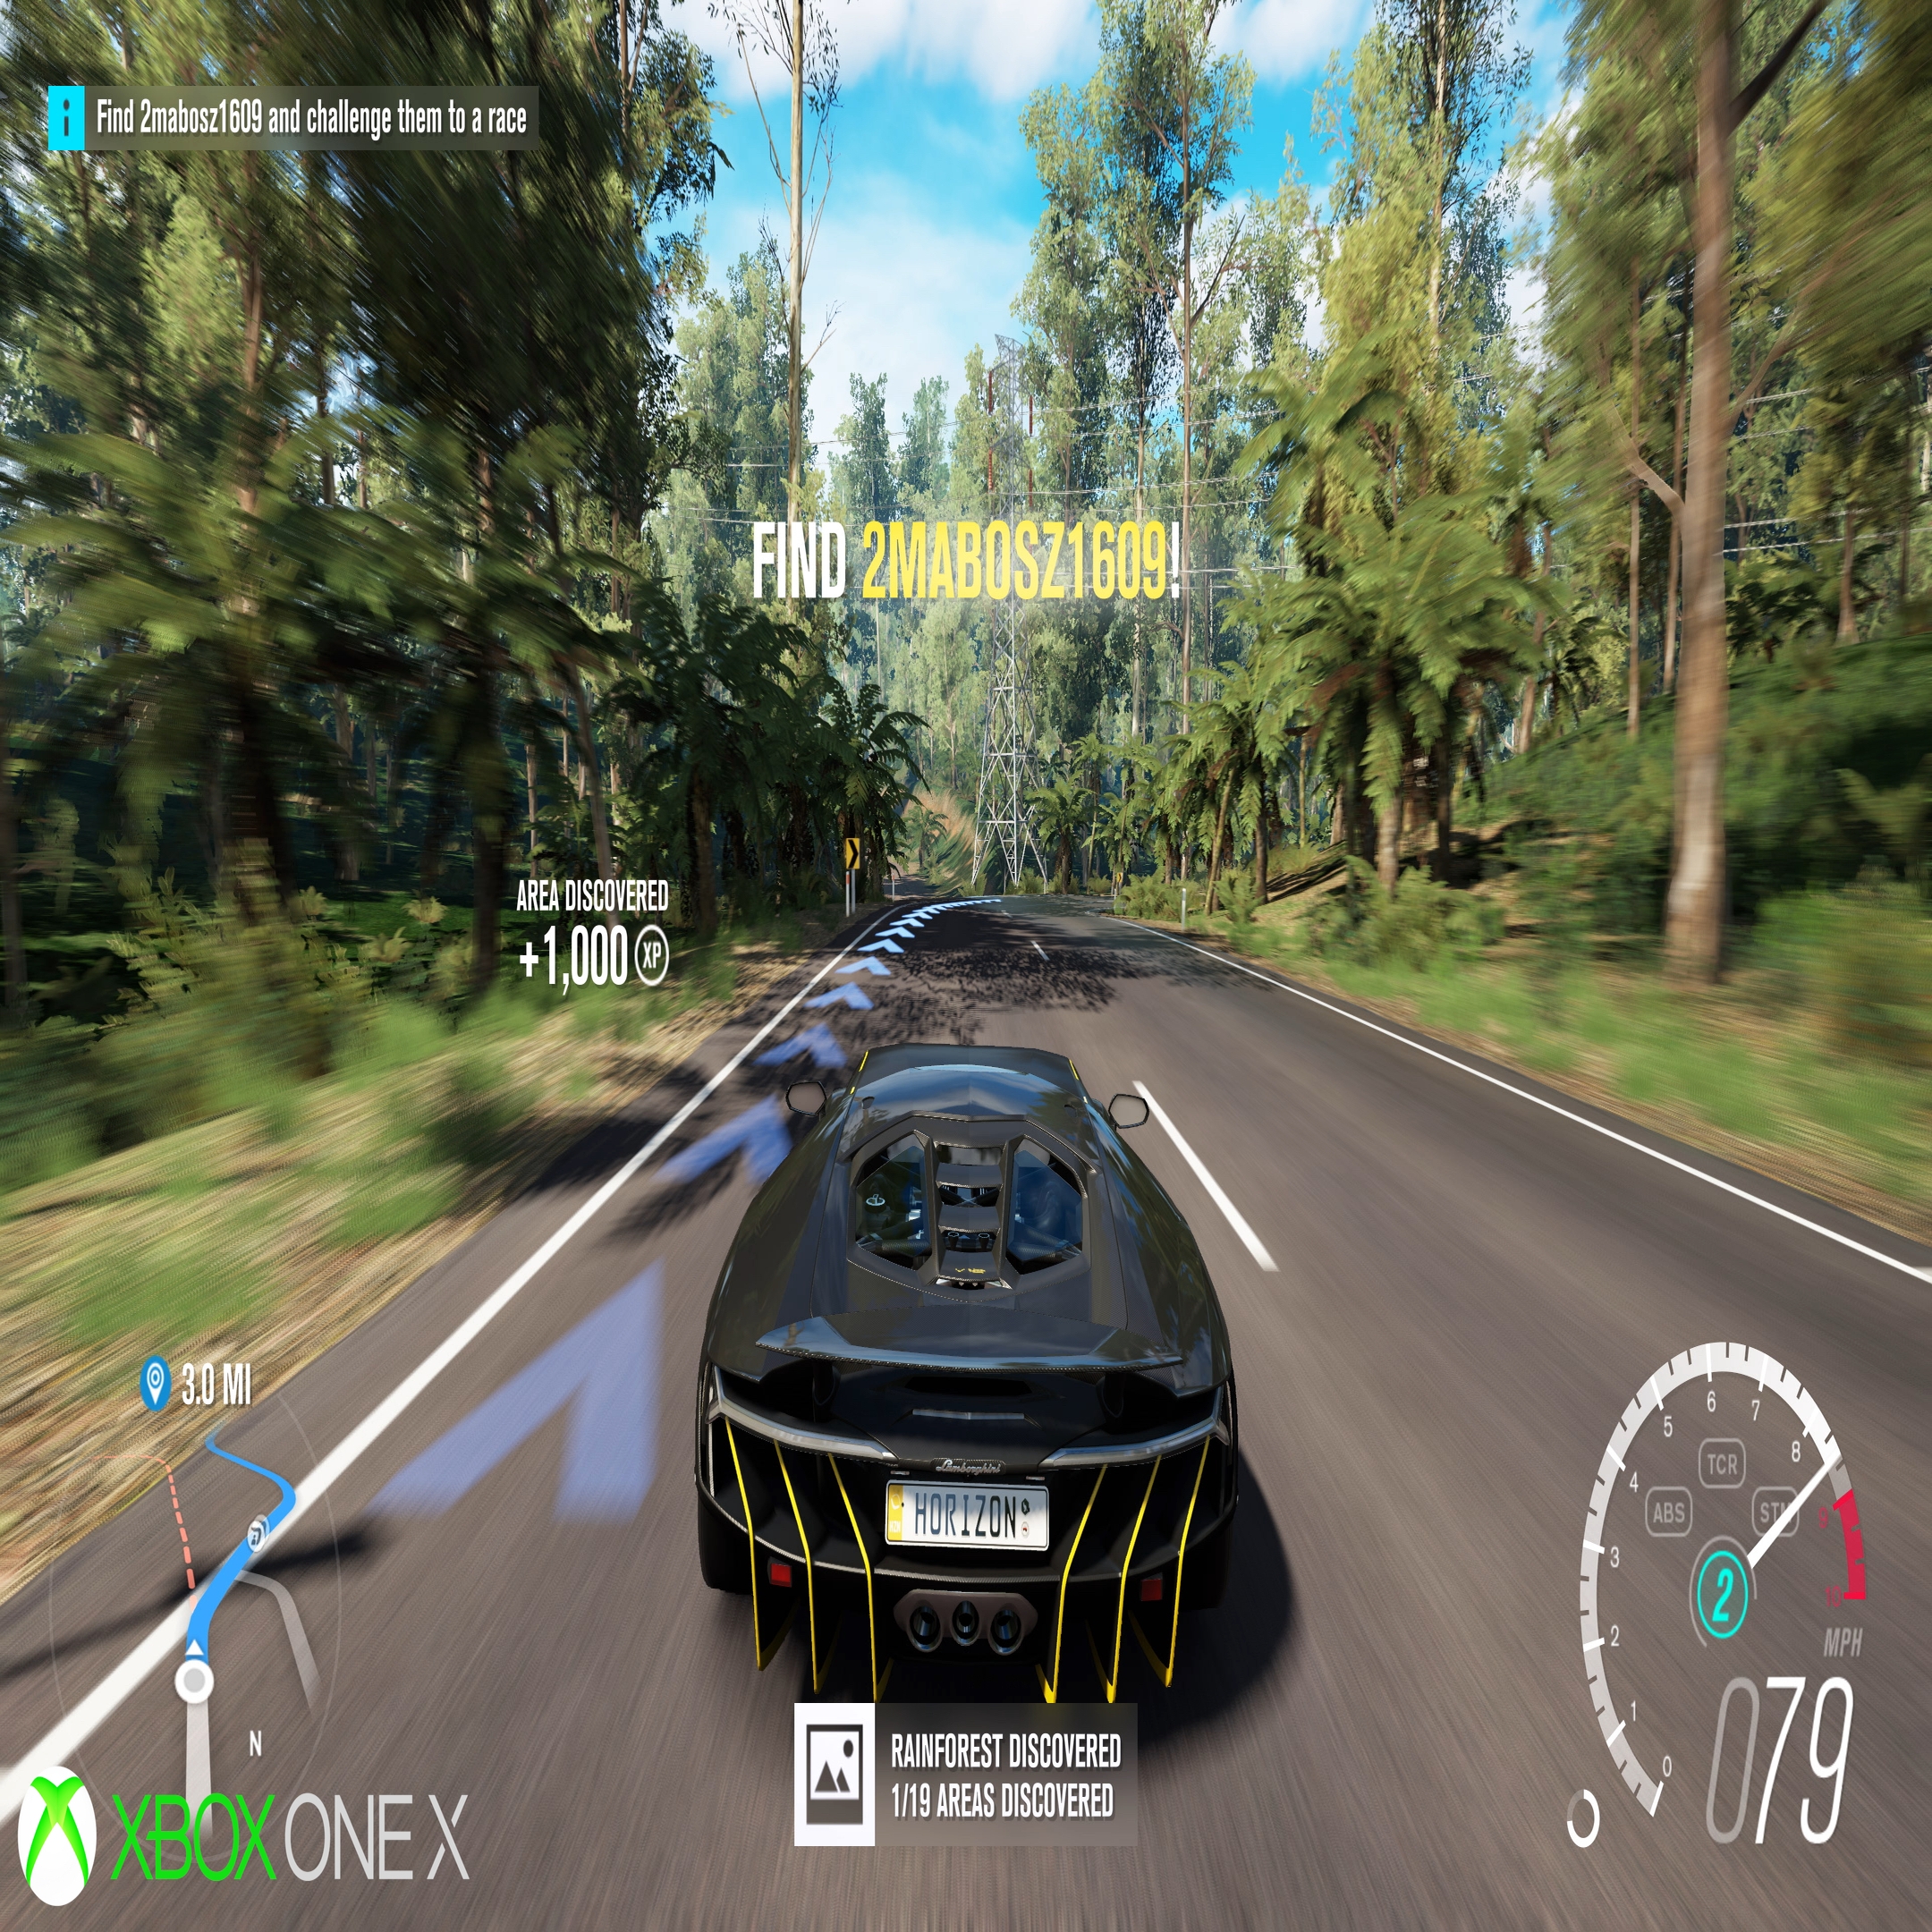  Forza Horizon 3 – Xbox One : Microsoft Corporation